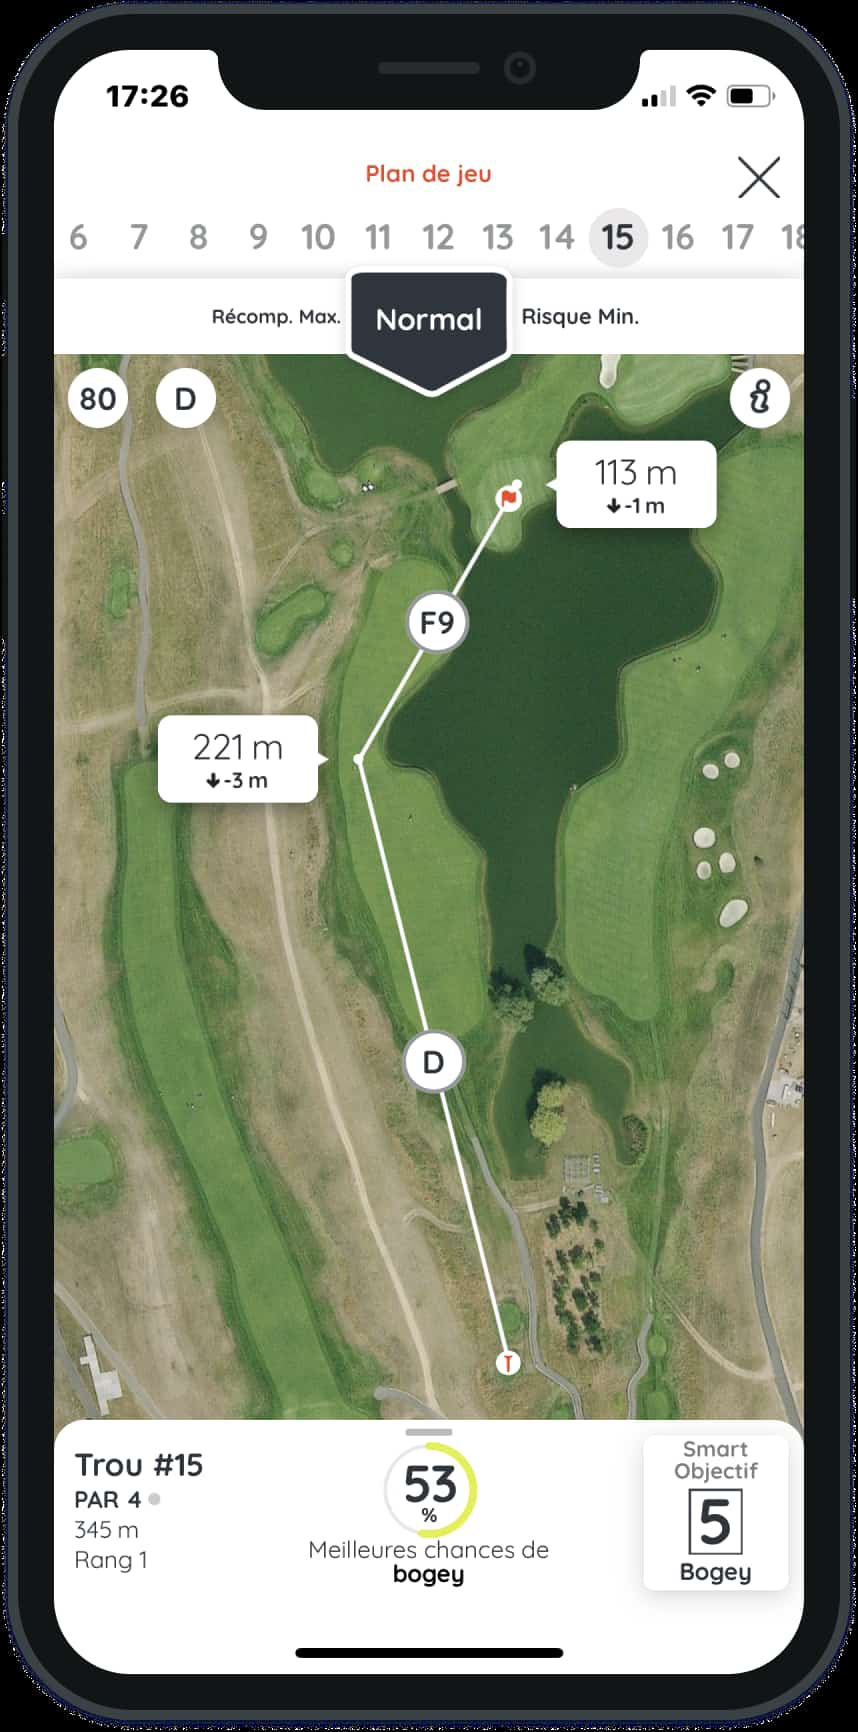 Golf plan